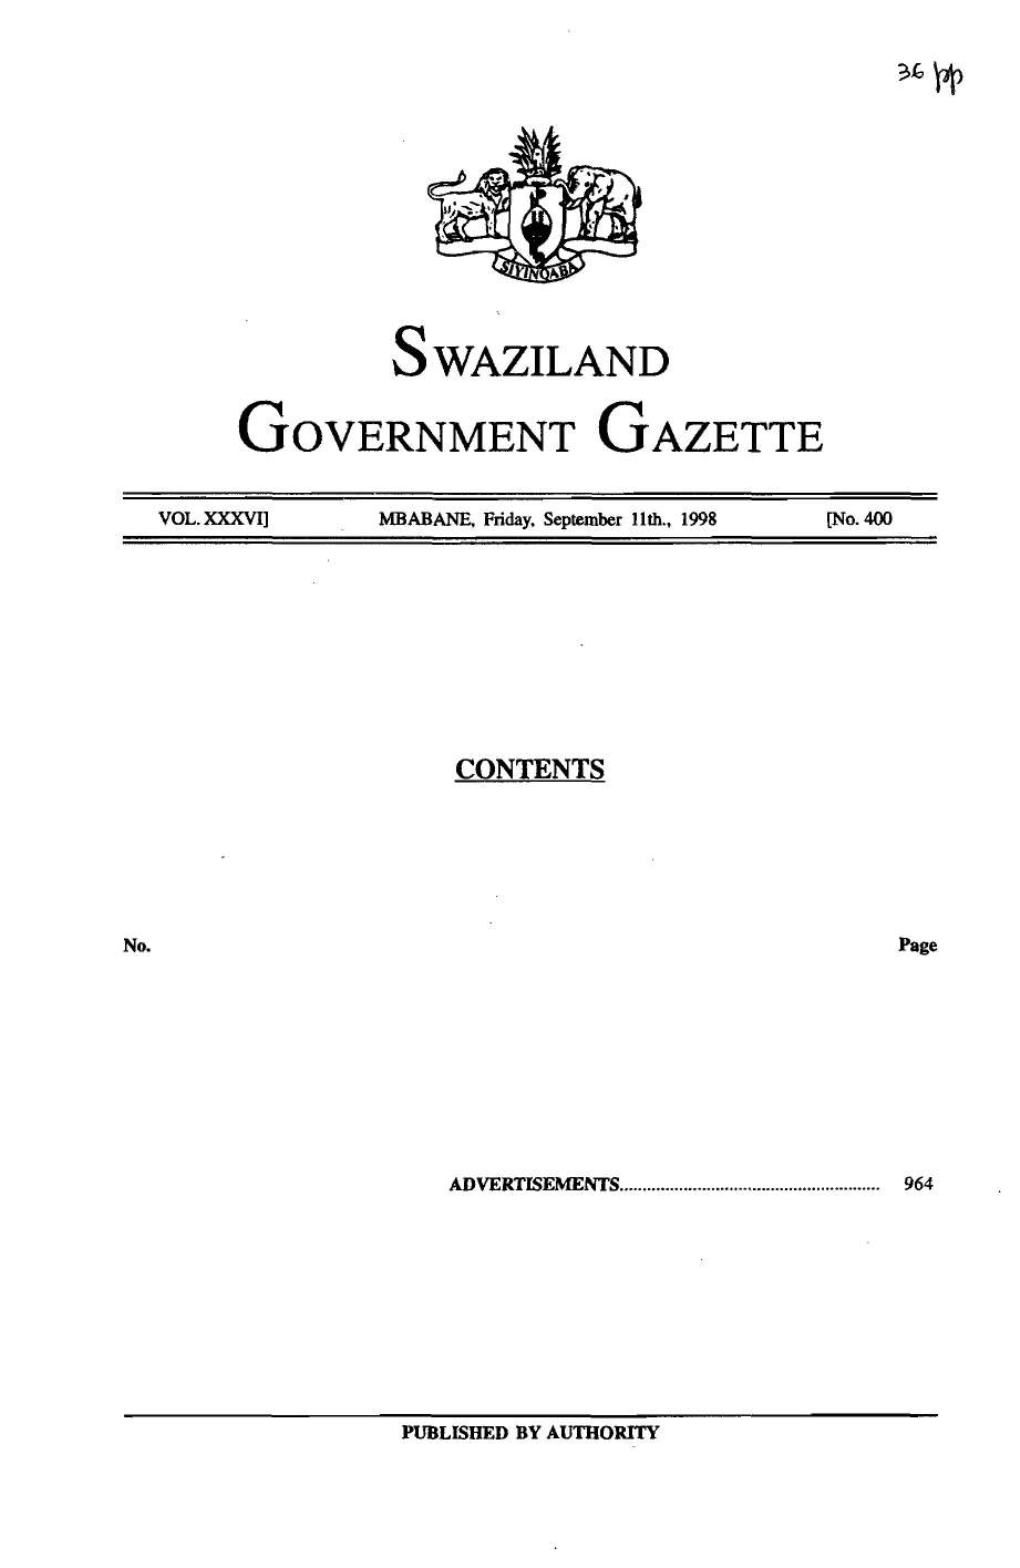 Government GAZETTE